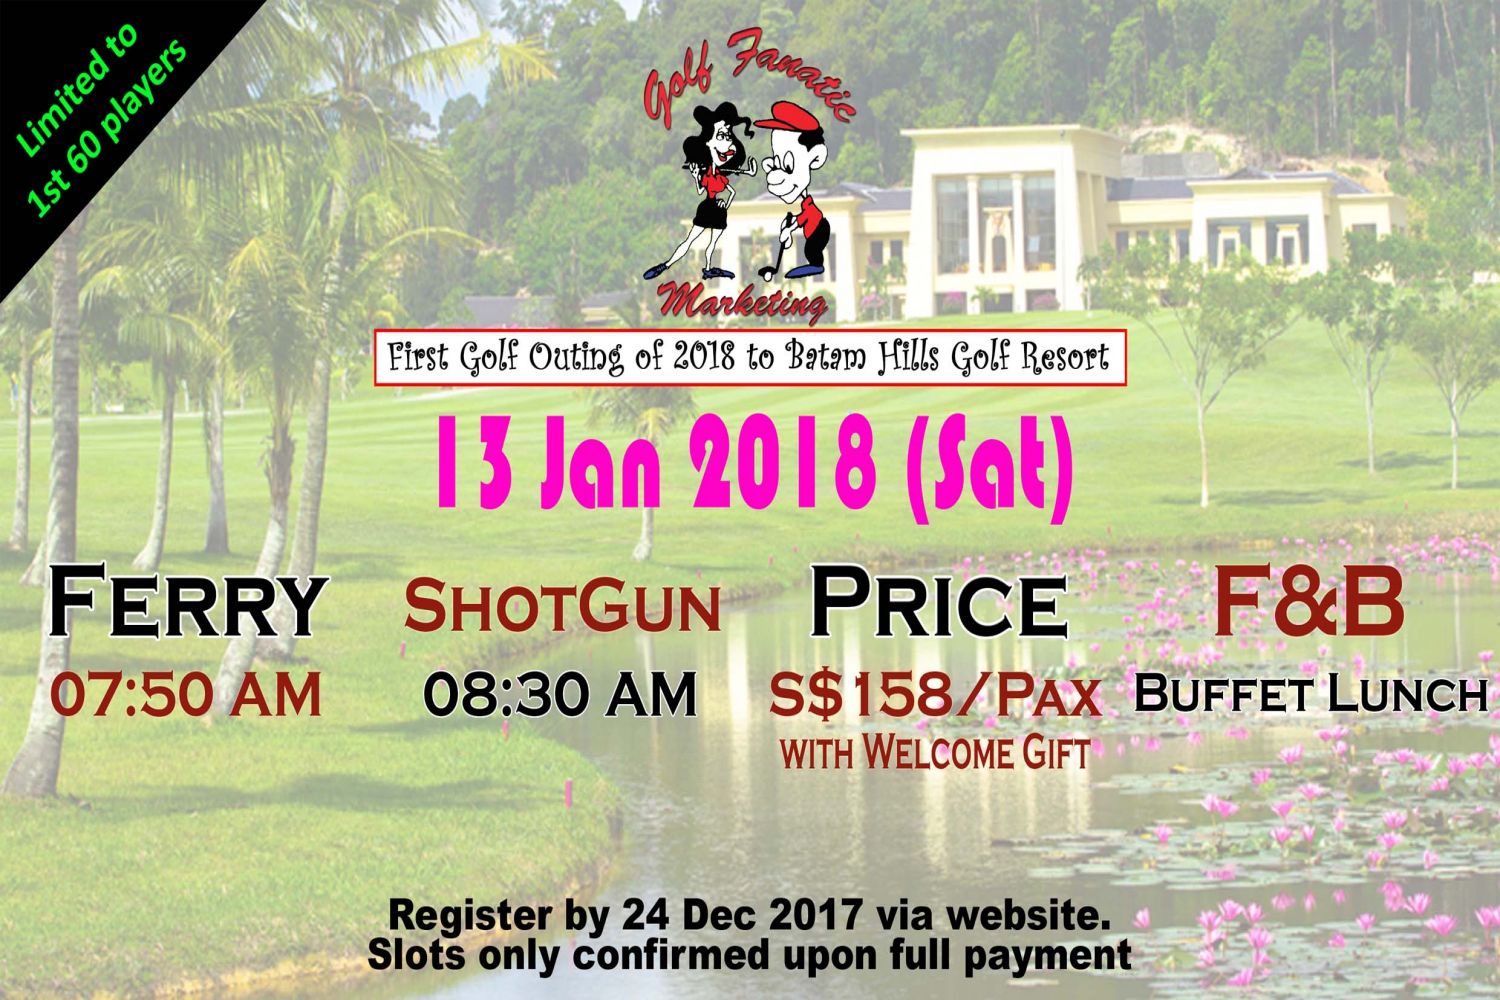 http://golfanaticmarketing.com/20180113---Golf-Fanatic-Marketing-Golf-Outing.php